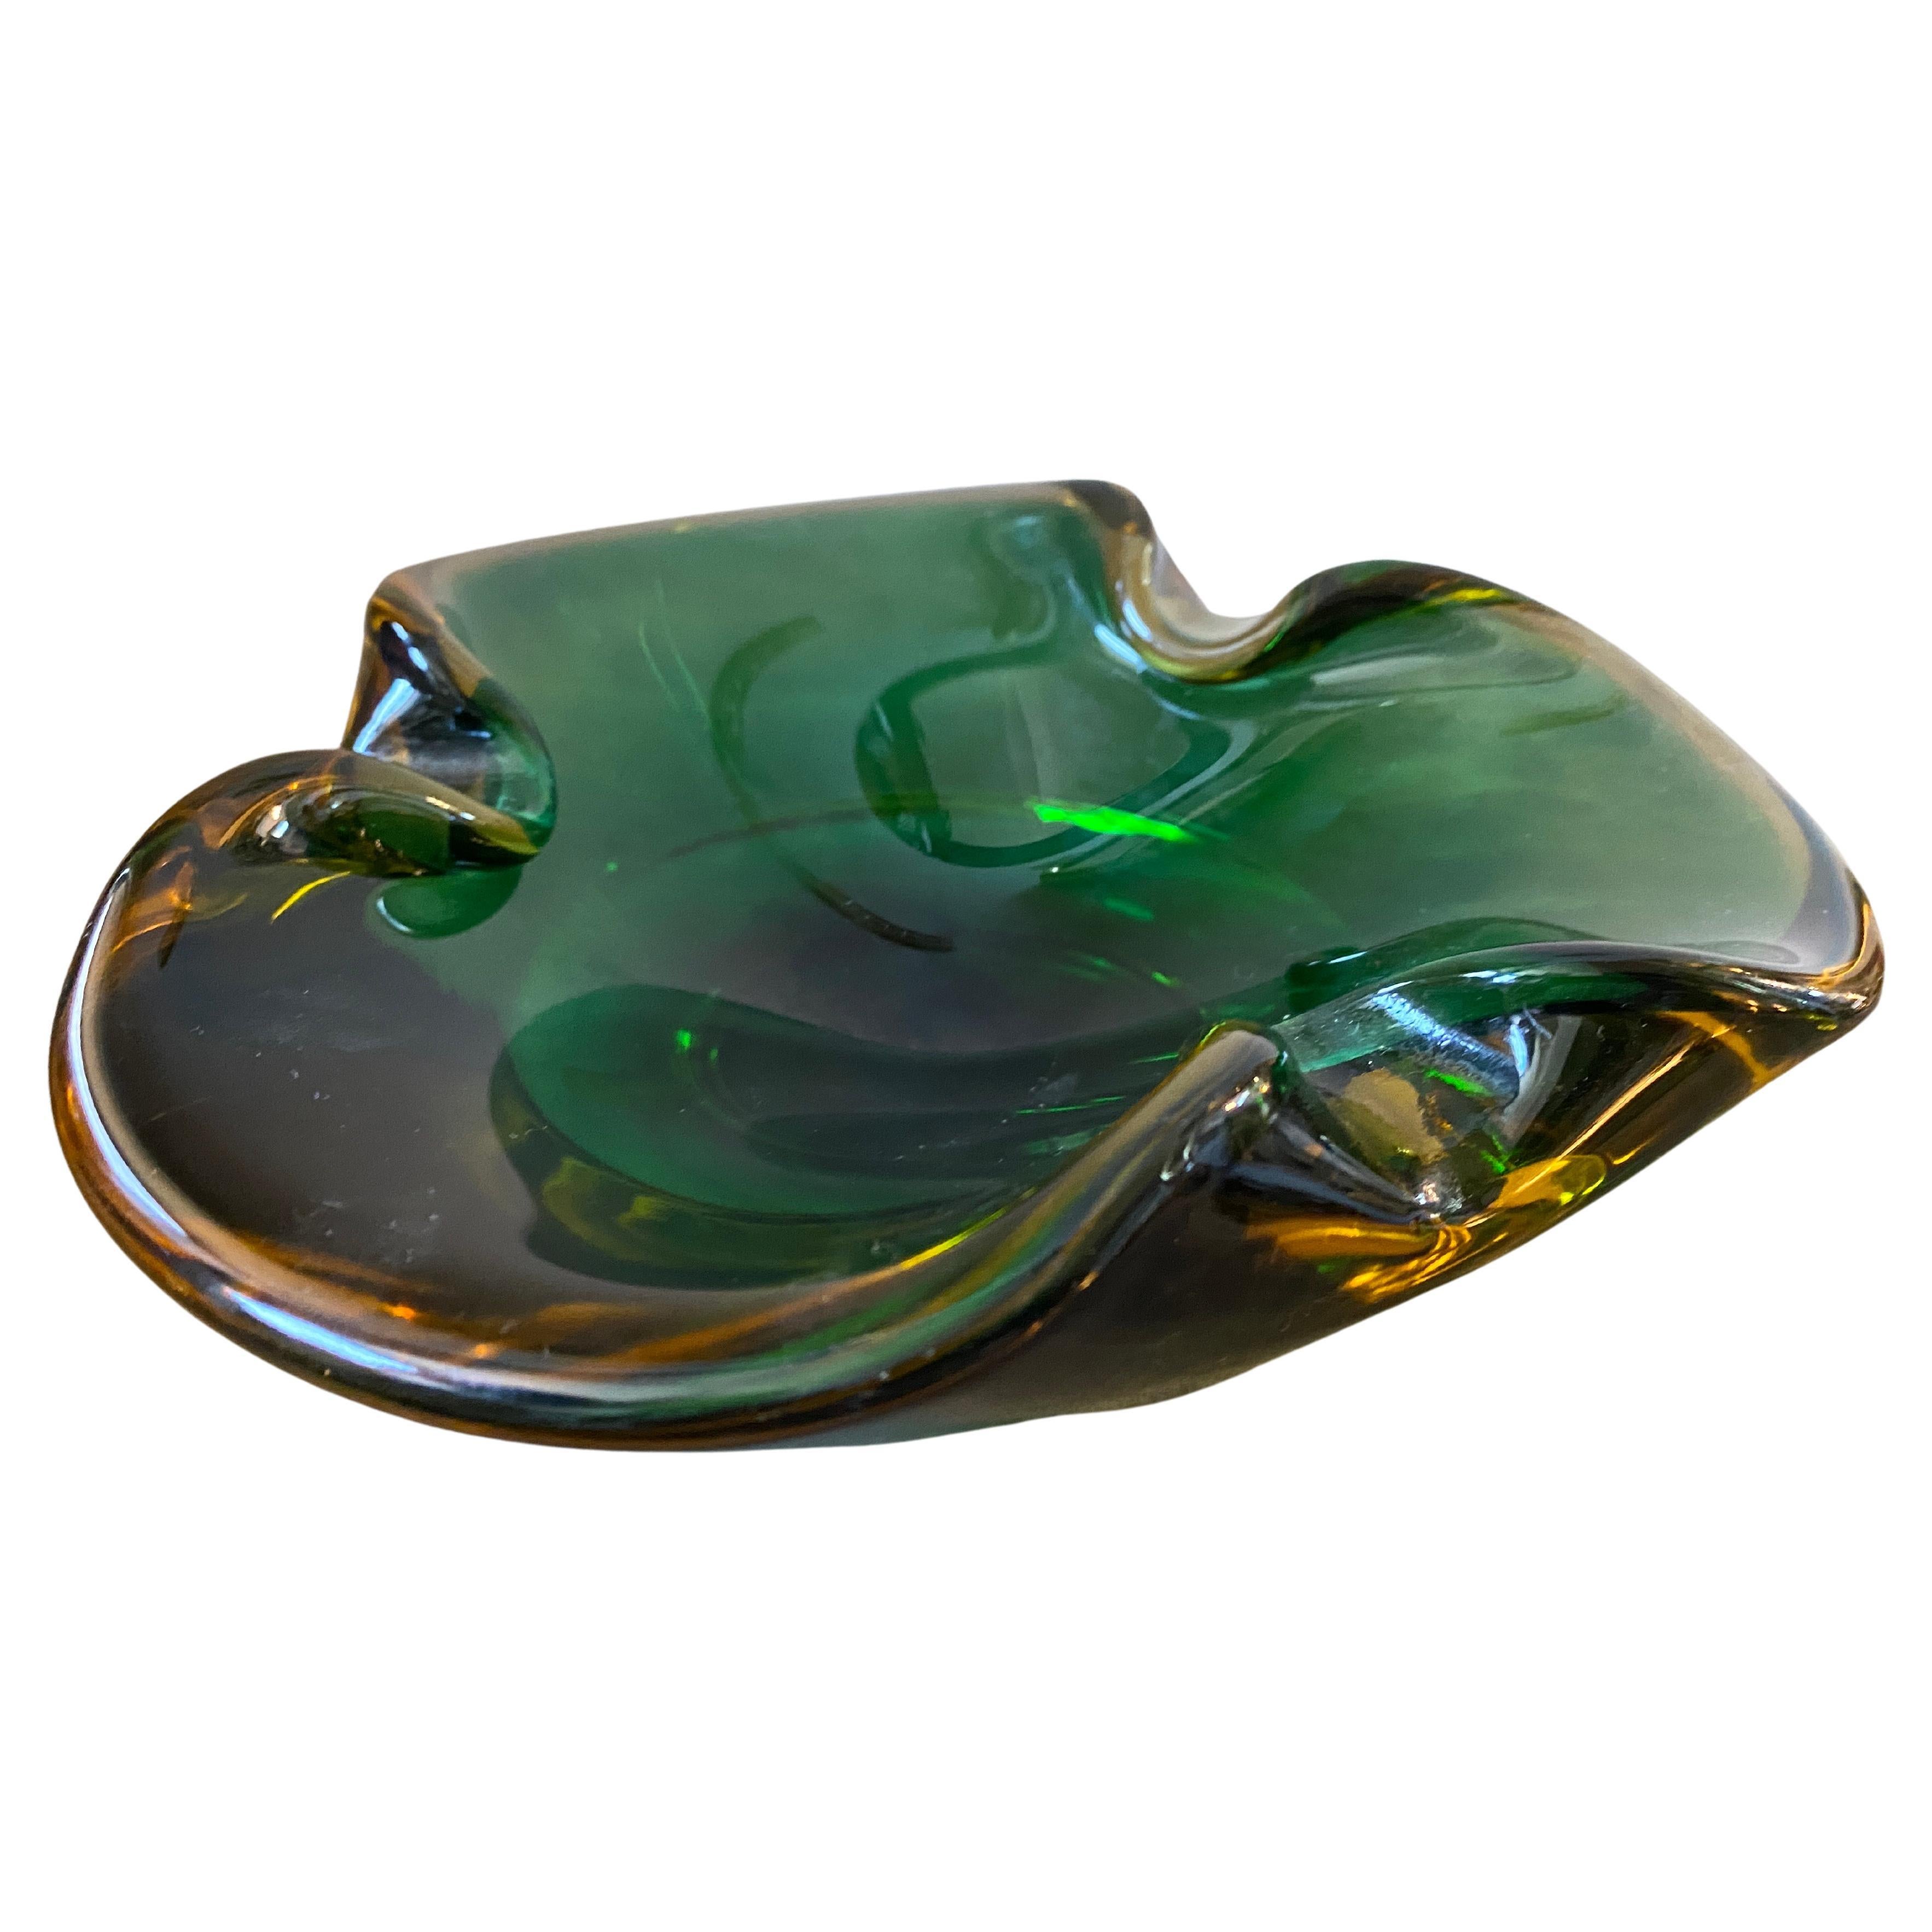 1970s Seguso Mid-Century Modern Green and Brown Murano Glass Bowl